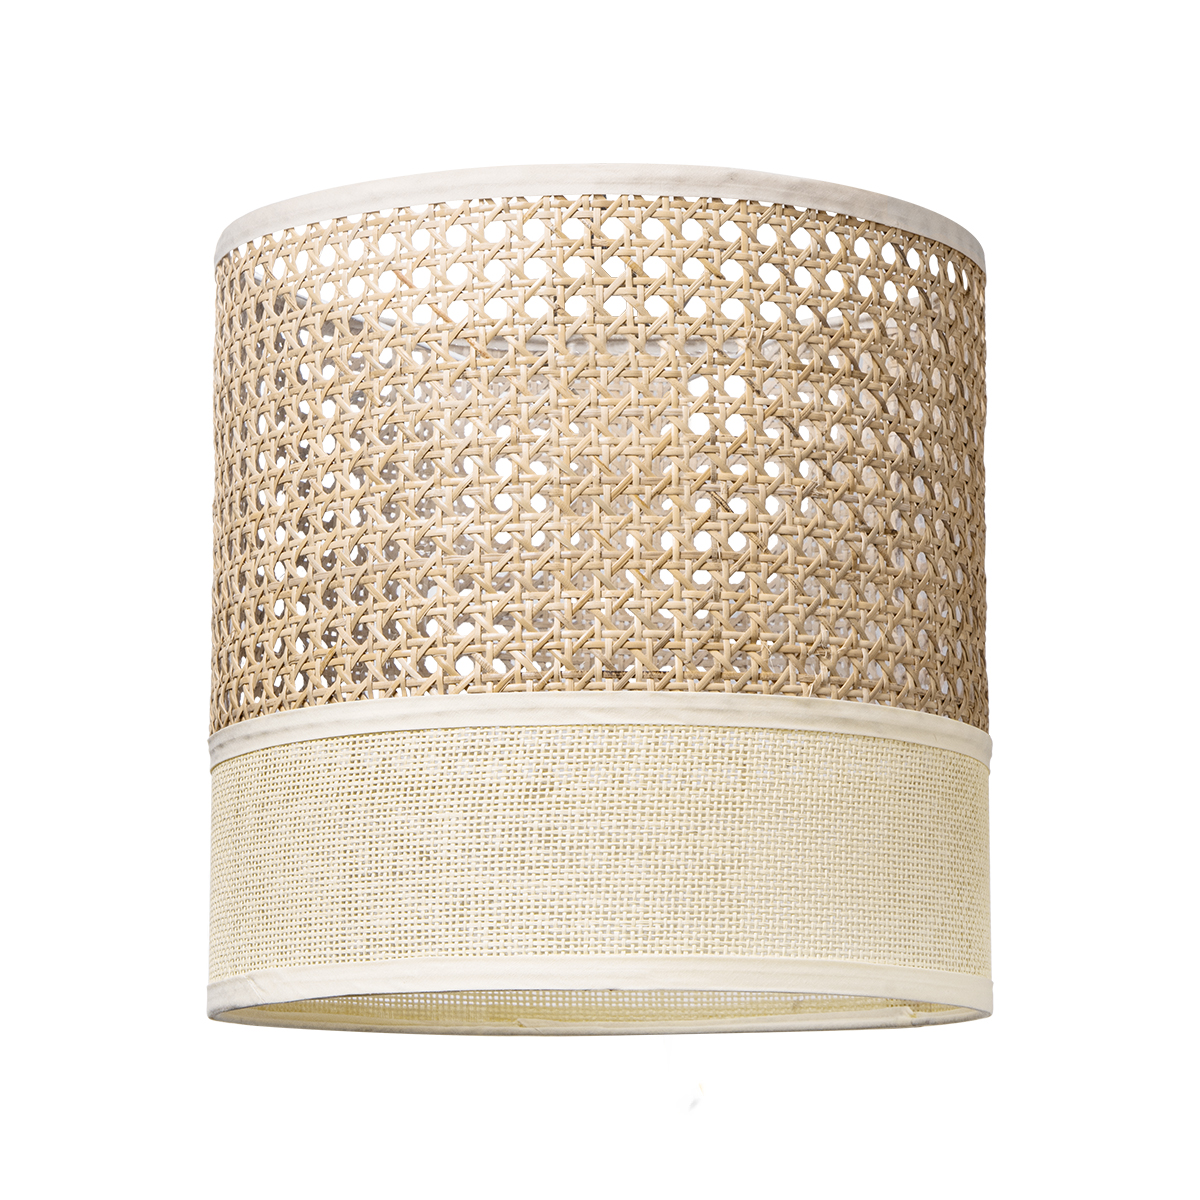 Tangla lighting - TLS7011-01NT - Lampshade - paper rattan and linen - natural - cylinder - diameter 30cm - E27